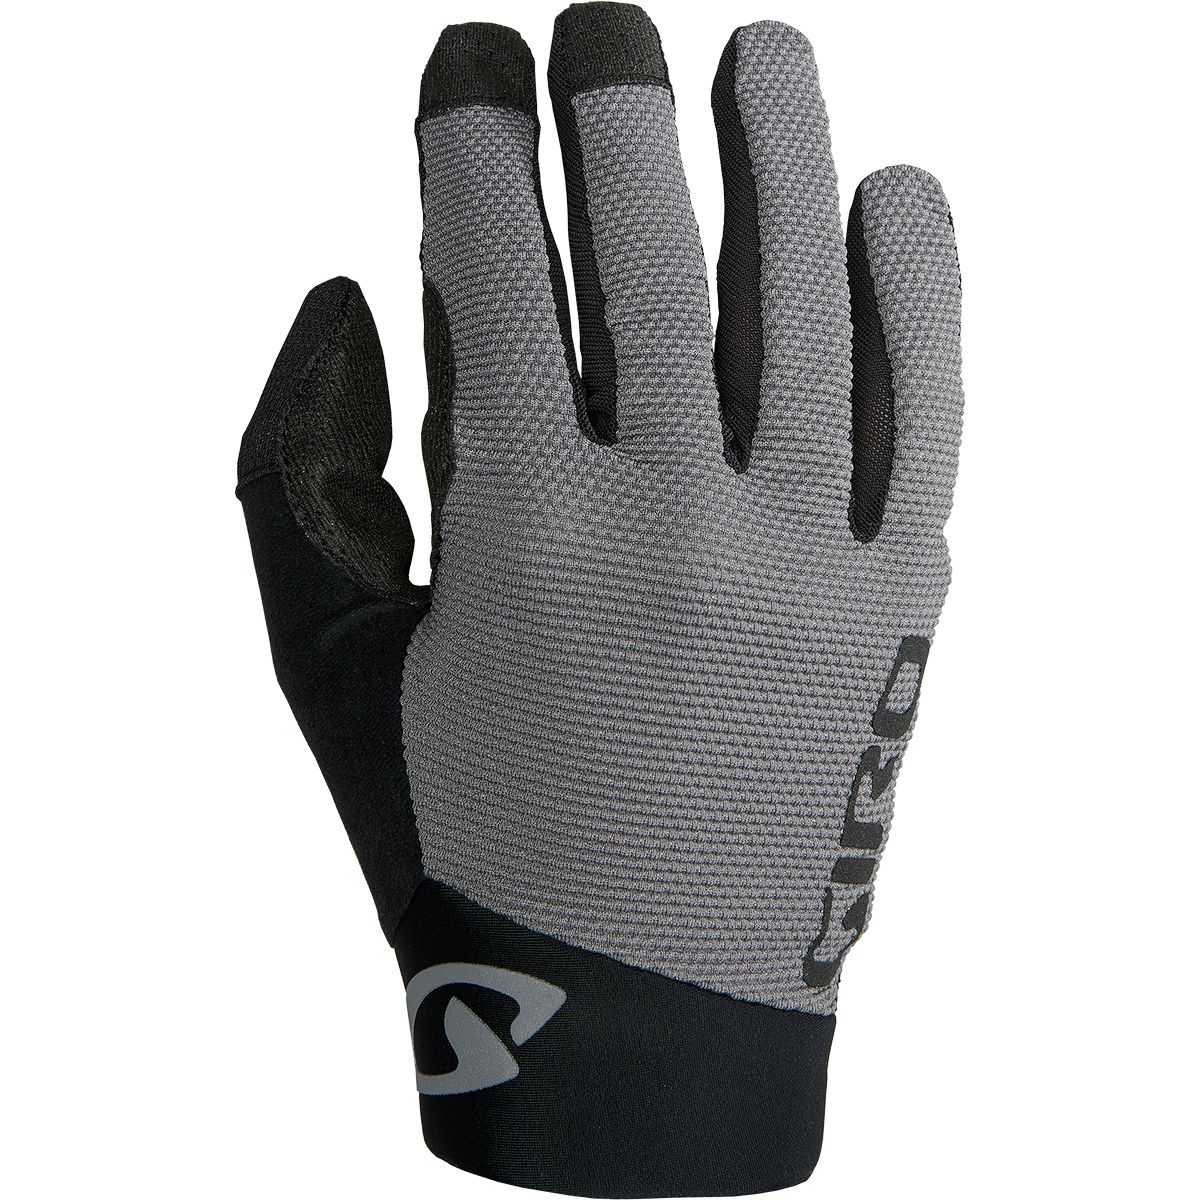 Giro Rivet II Glove - Men's